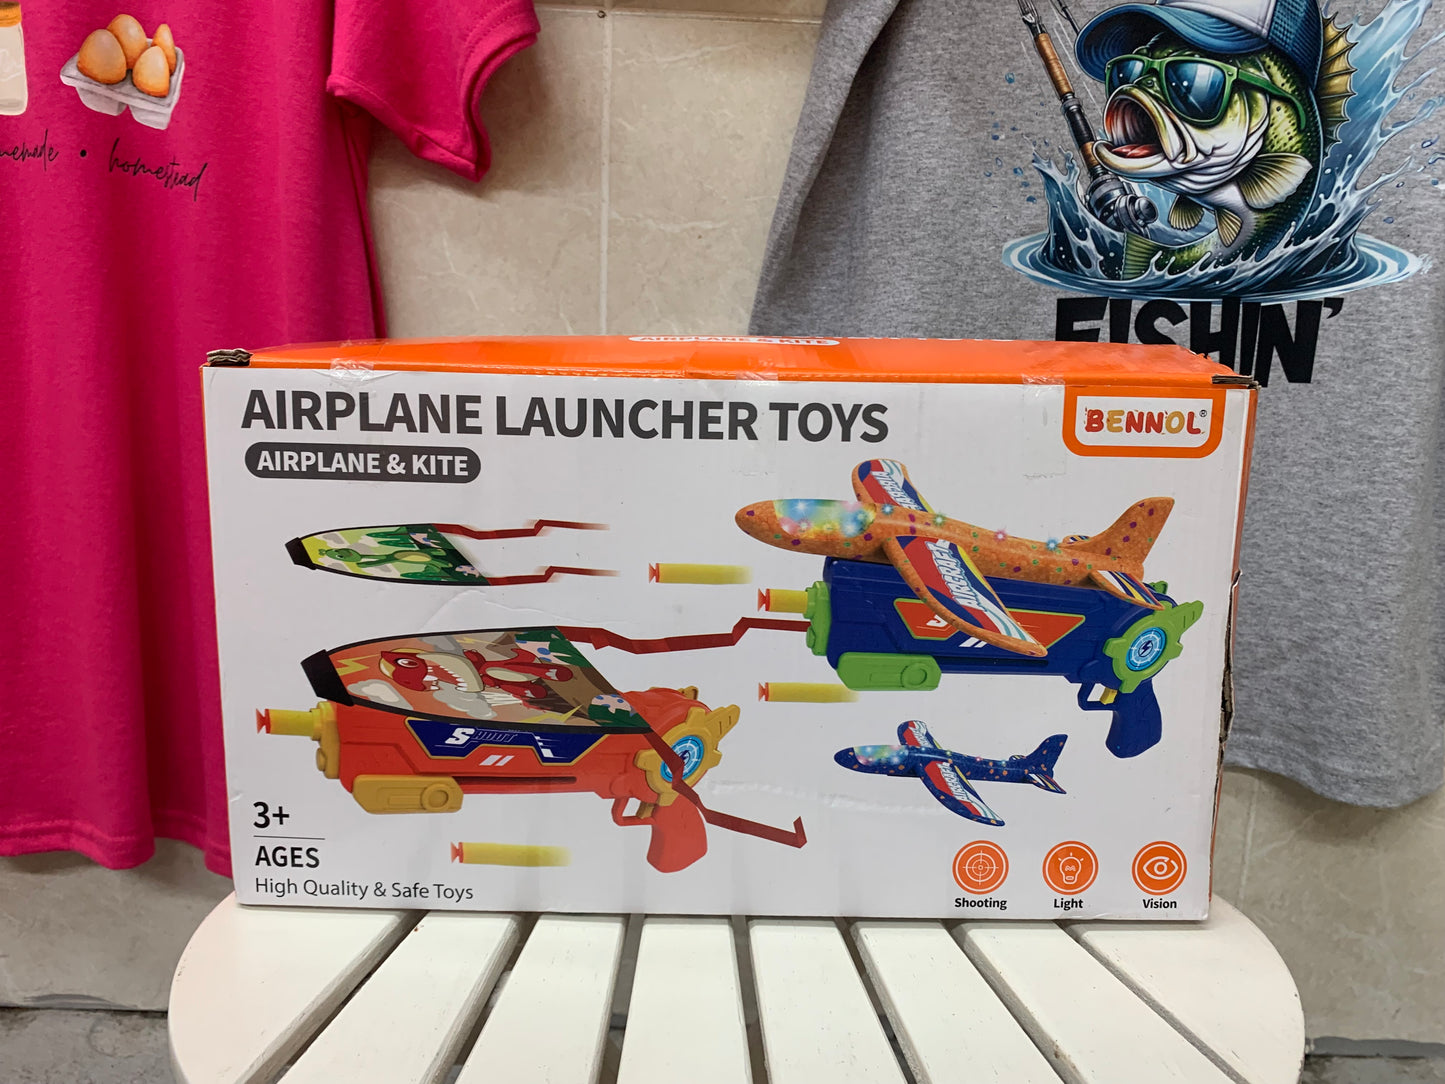 Launching Toys